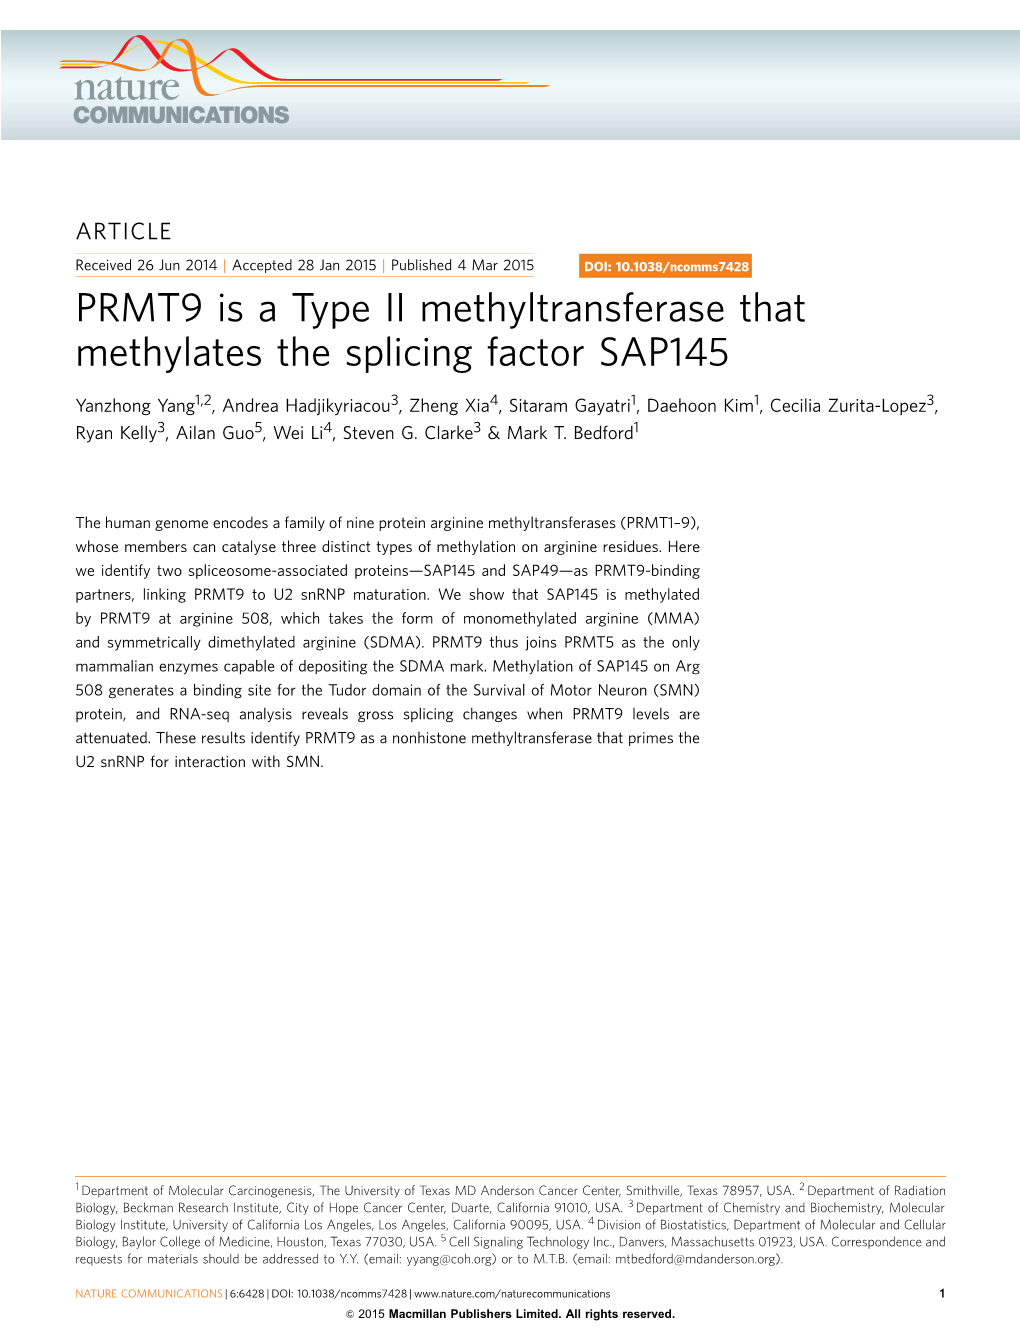 PRMT9 Is a Type II Methyltransferase That Methylates the Splicing Factor SAP145